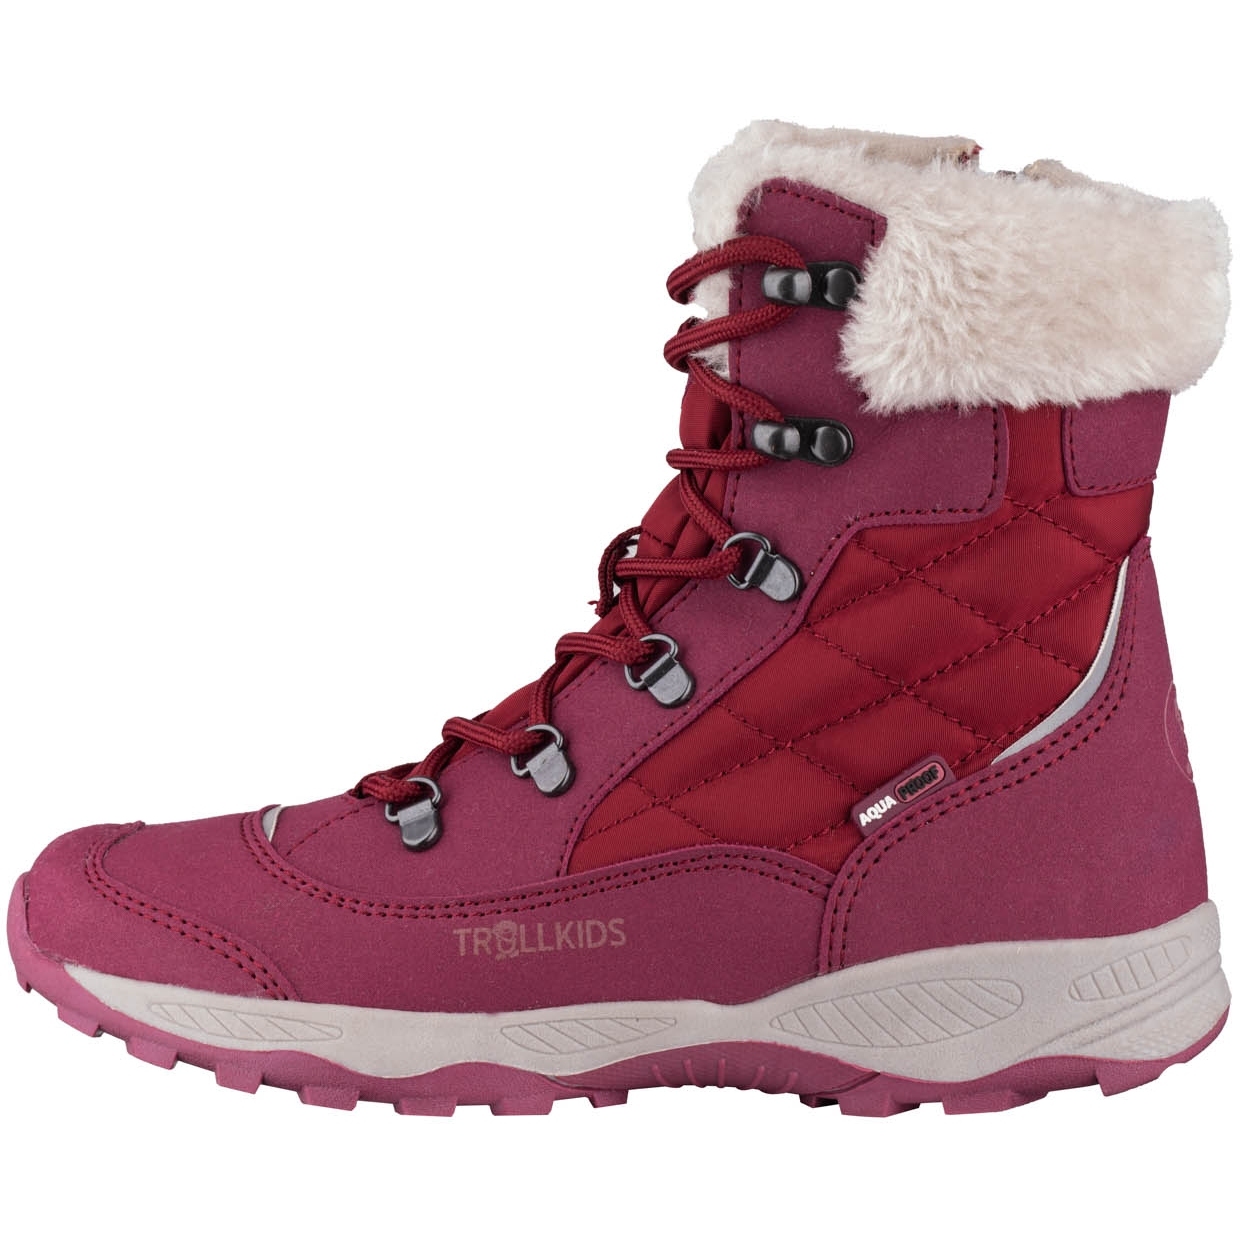 Picture of Trollkids Hemsedal Girls Winter Boots - Dark Rose